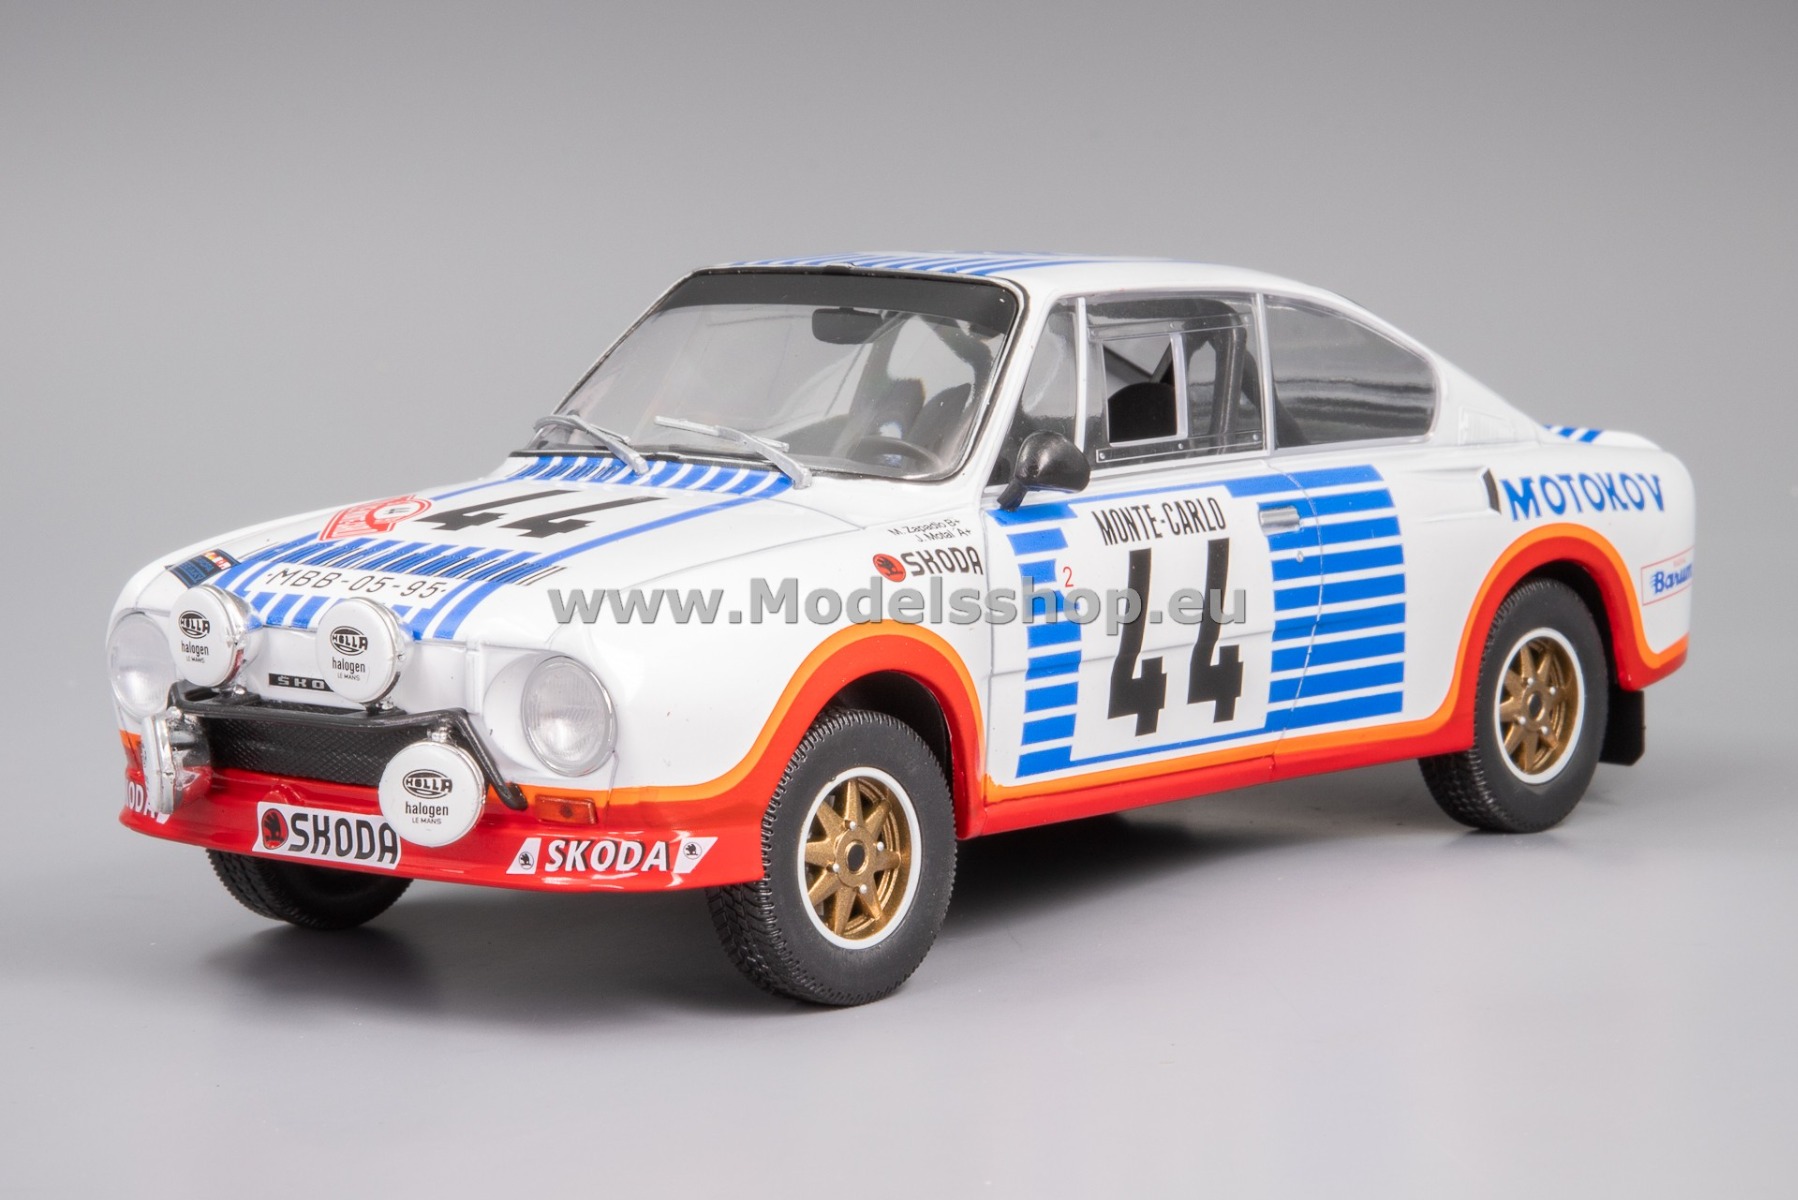 IXO24RAL030A.22 Skoda 130 RS, No.44, Rally WM, Rallye Monte Carlo 1977, M.Zapadlo/J.Motal